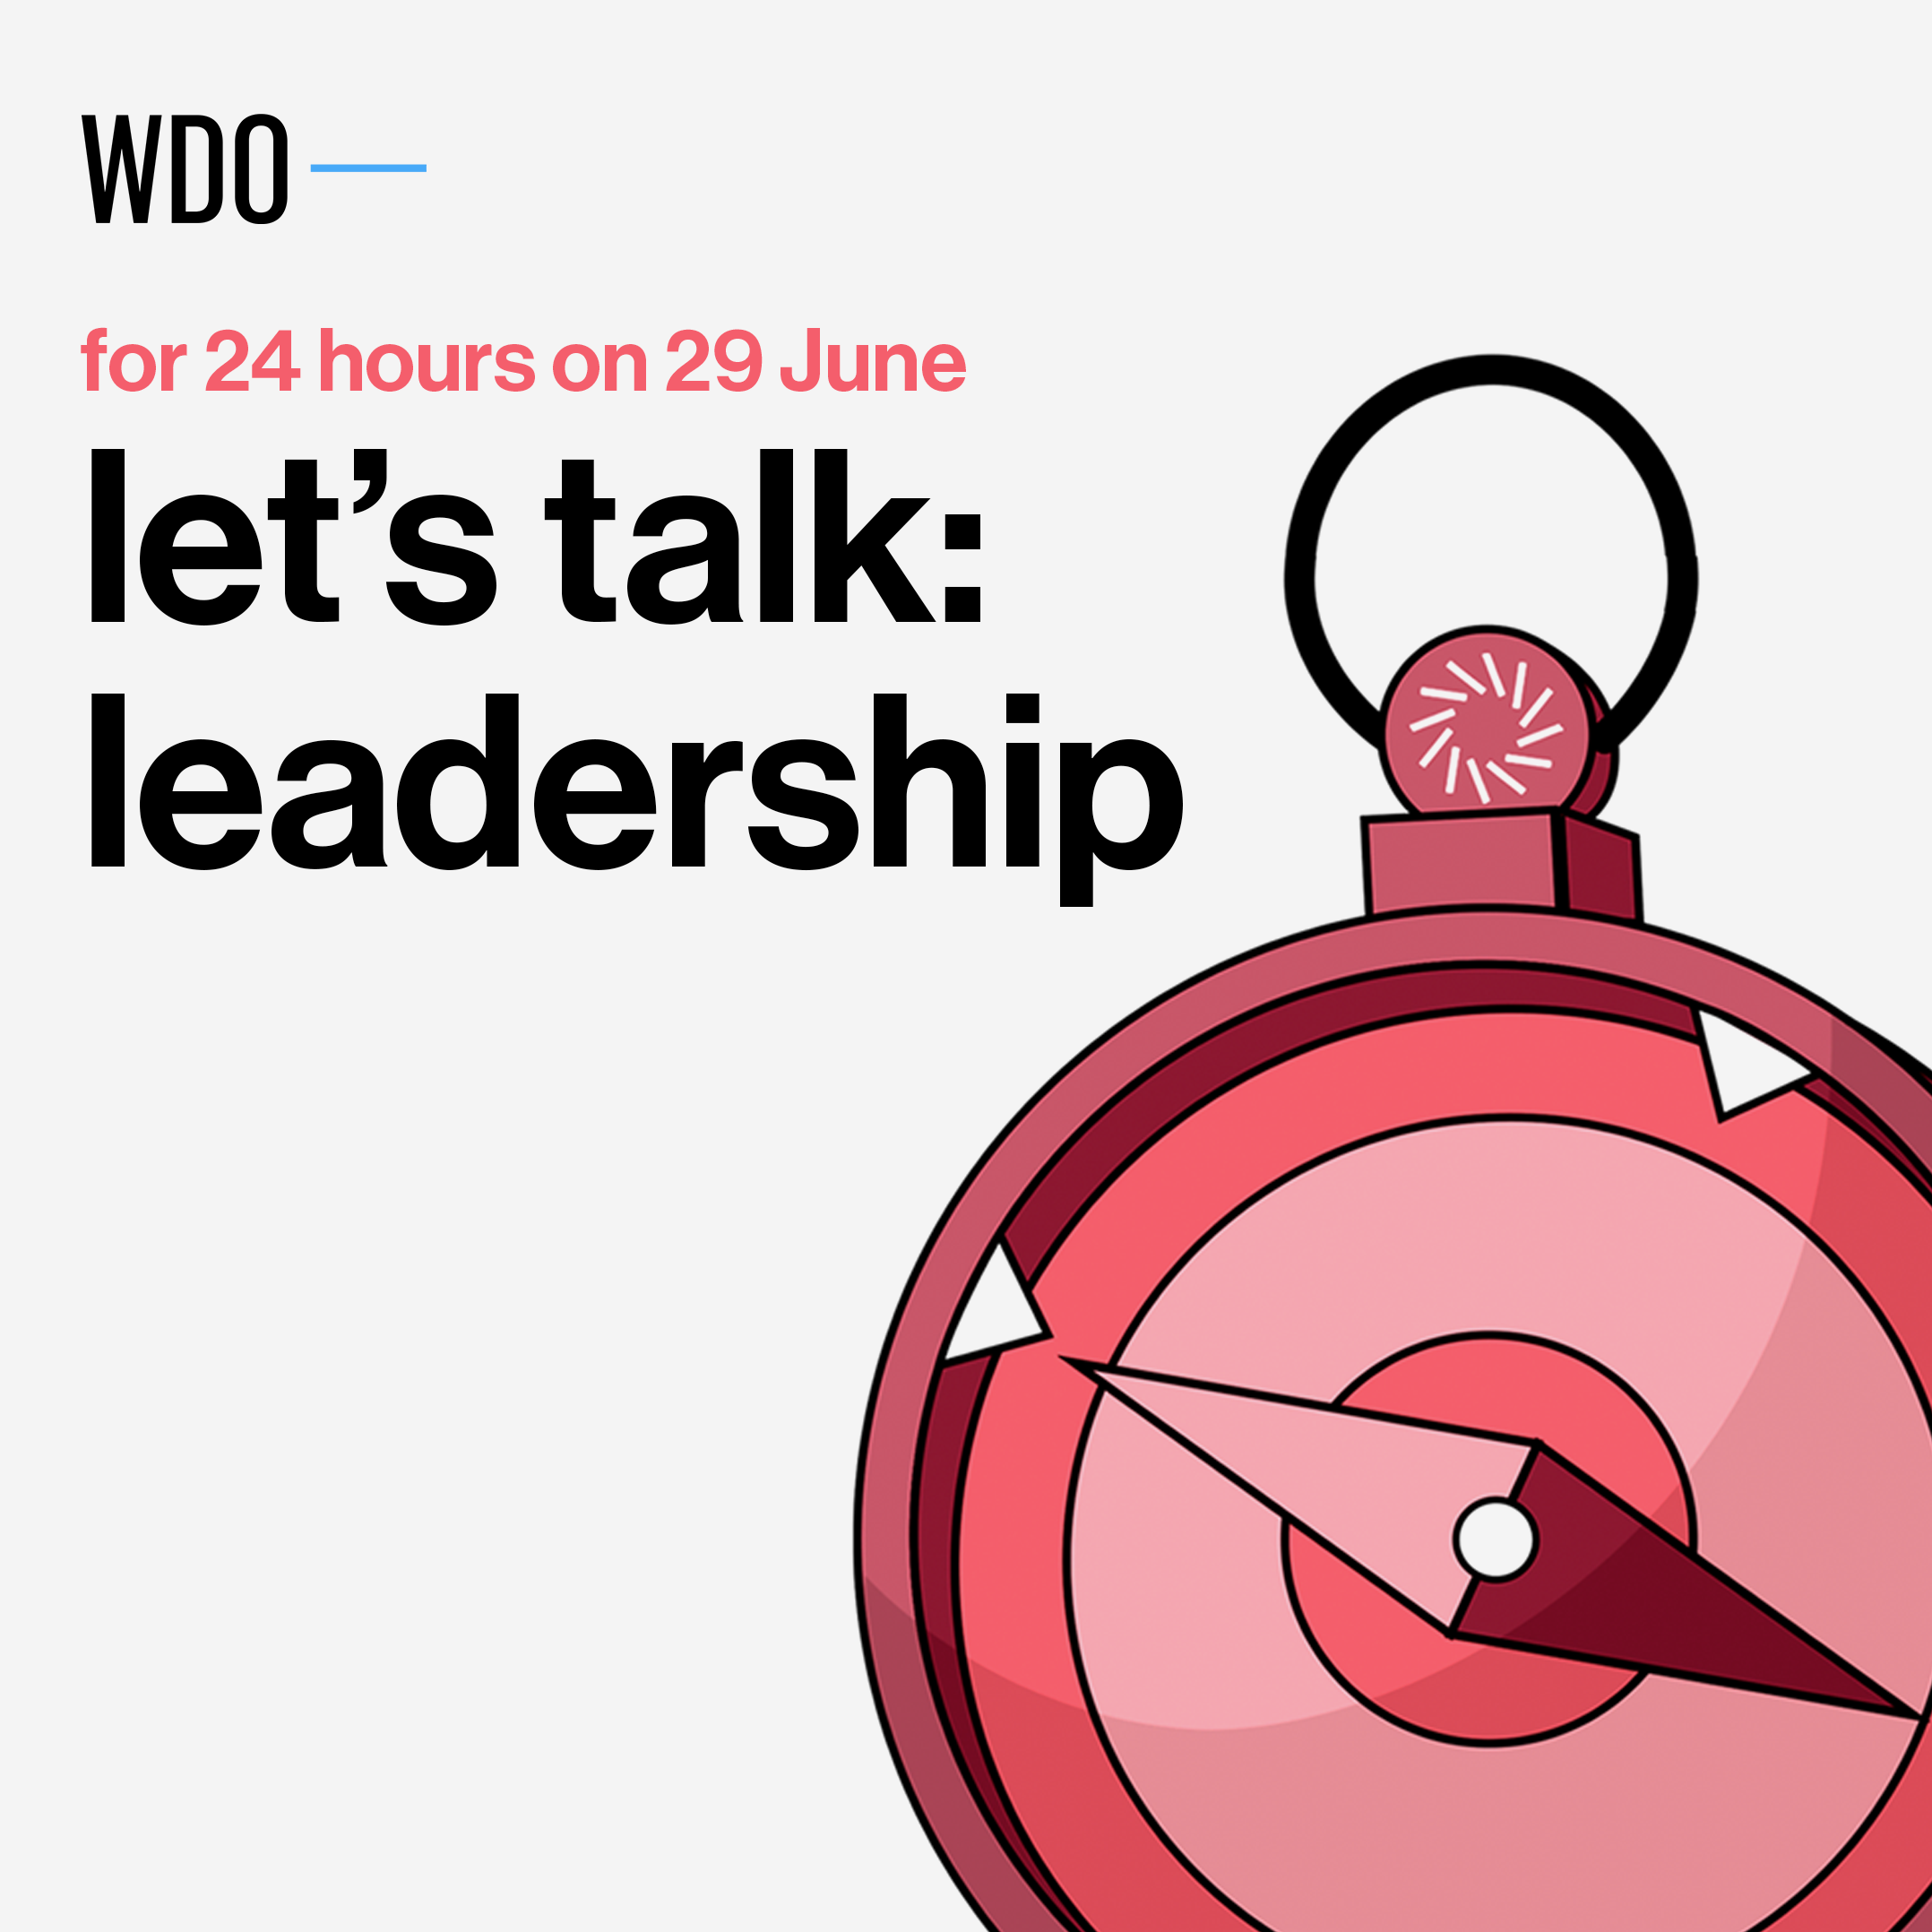 WDO Let's talk: leadership